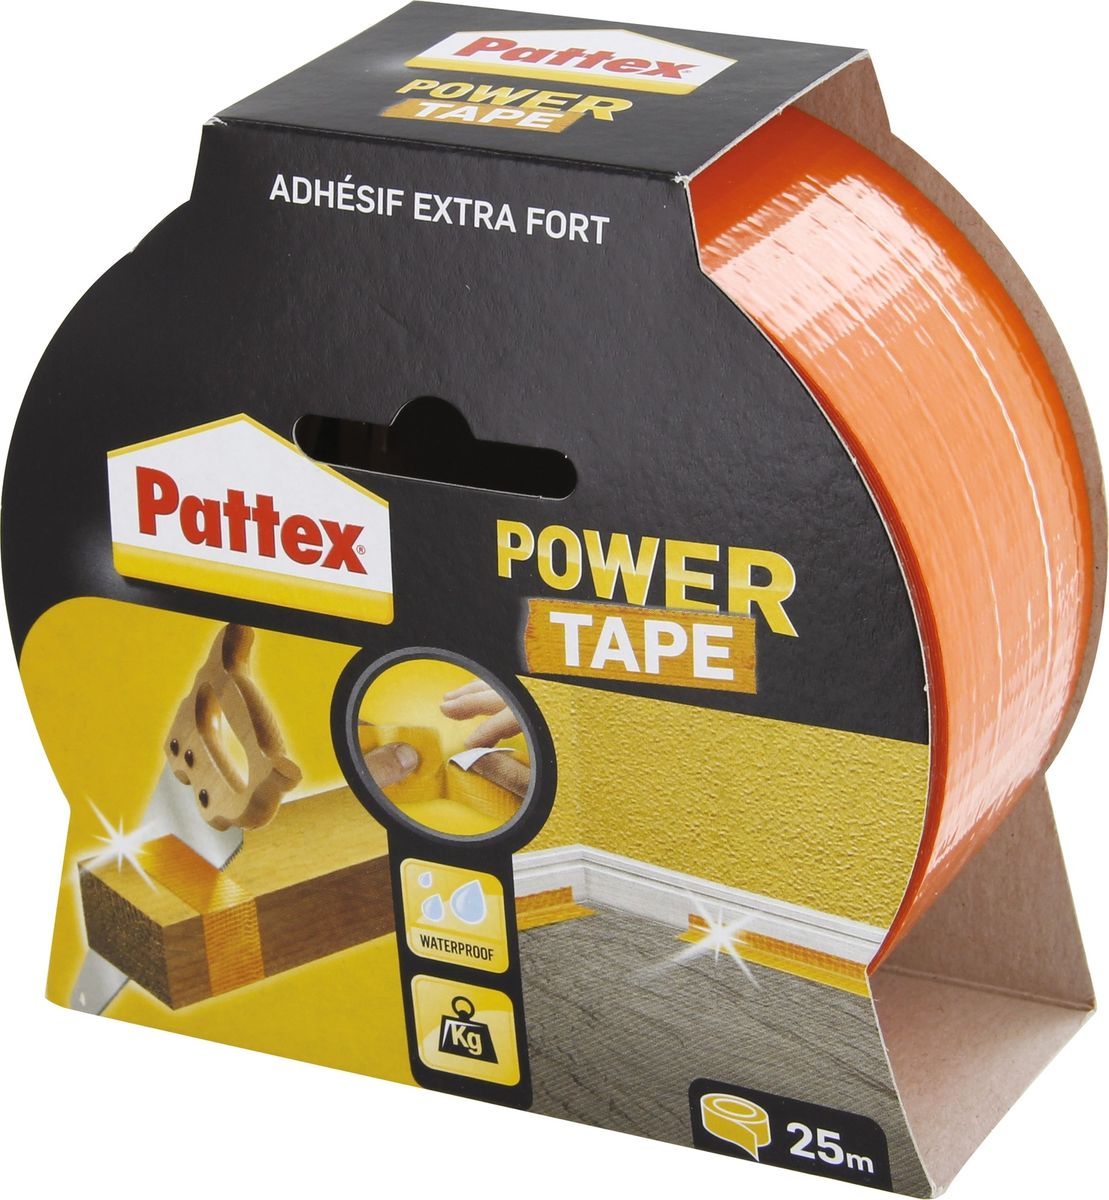 Pattex Adhesif Reparation Power Tape Orange Etui 25m 